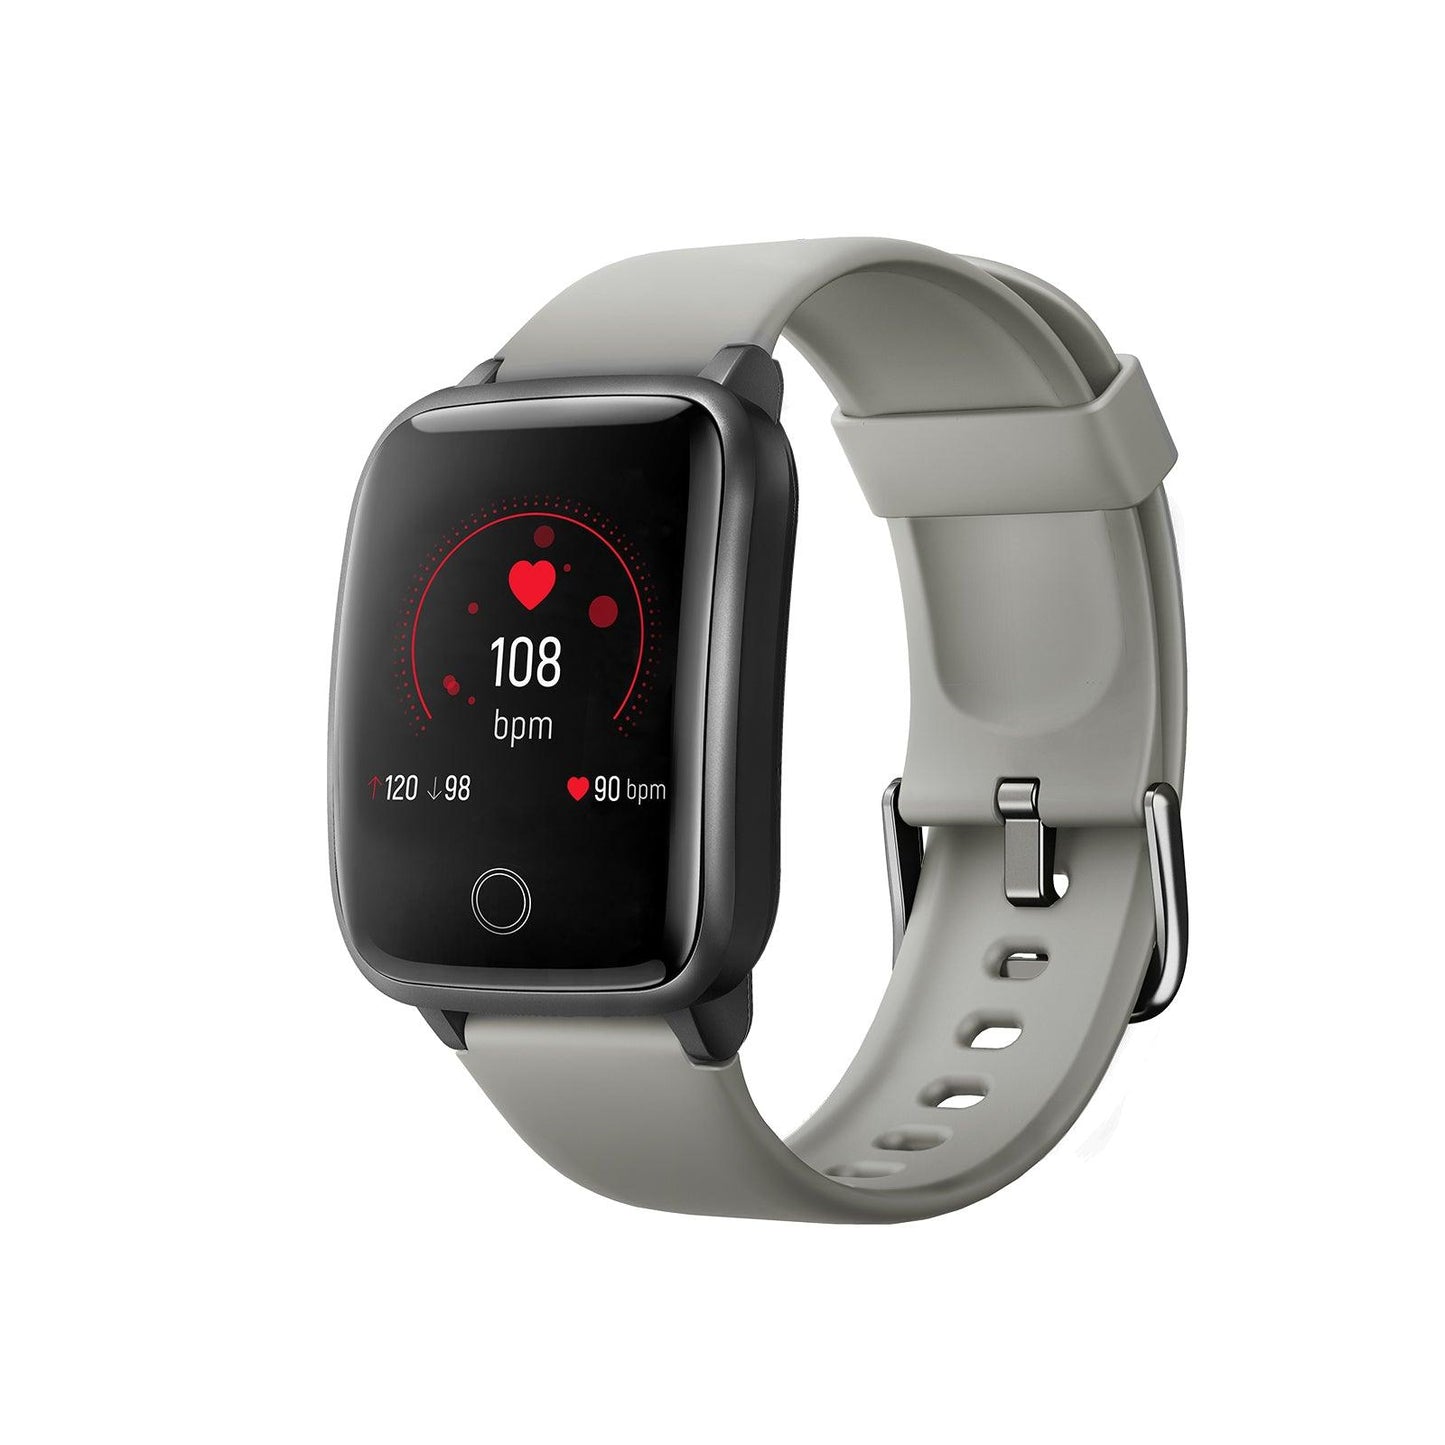 FitSmart Smart Watch Bluetooth Heart Rate Monitor Waterproof LCD Touch Screen - Silver Grey